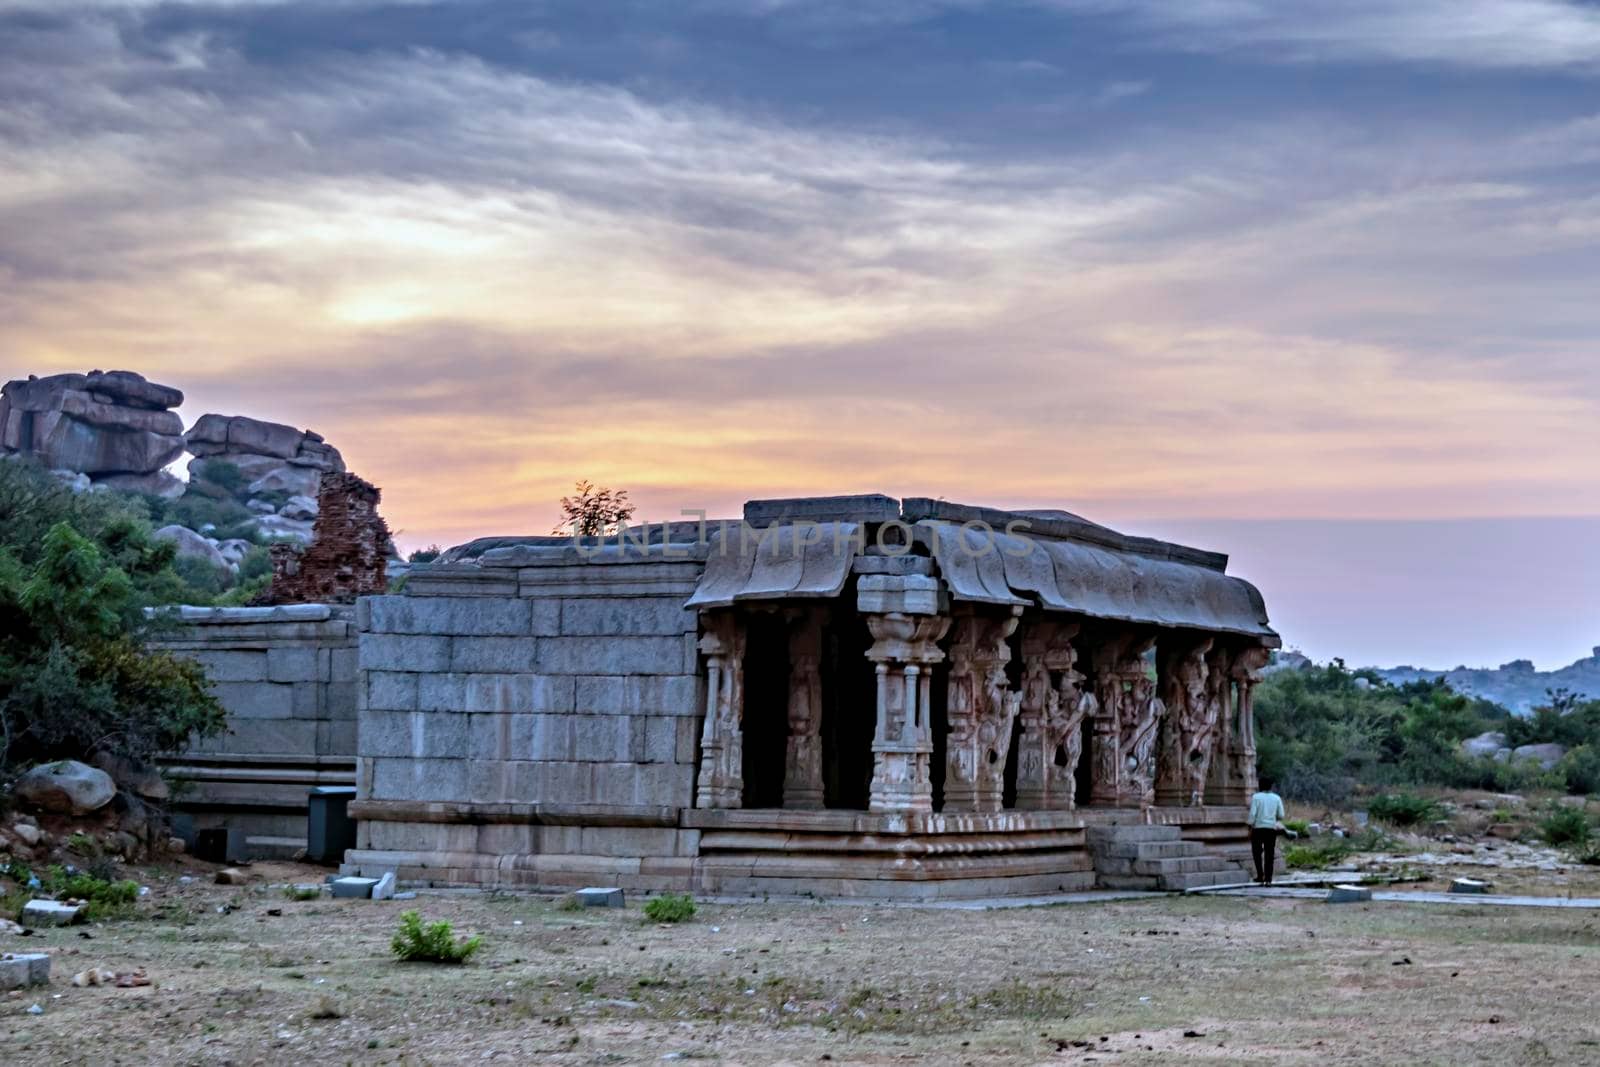 Hampi,Karnataka, India-November 8th, 2018: Sunset behind ancient stone temple in Vitthala temple complex in Hampi.